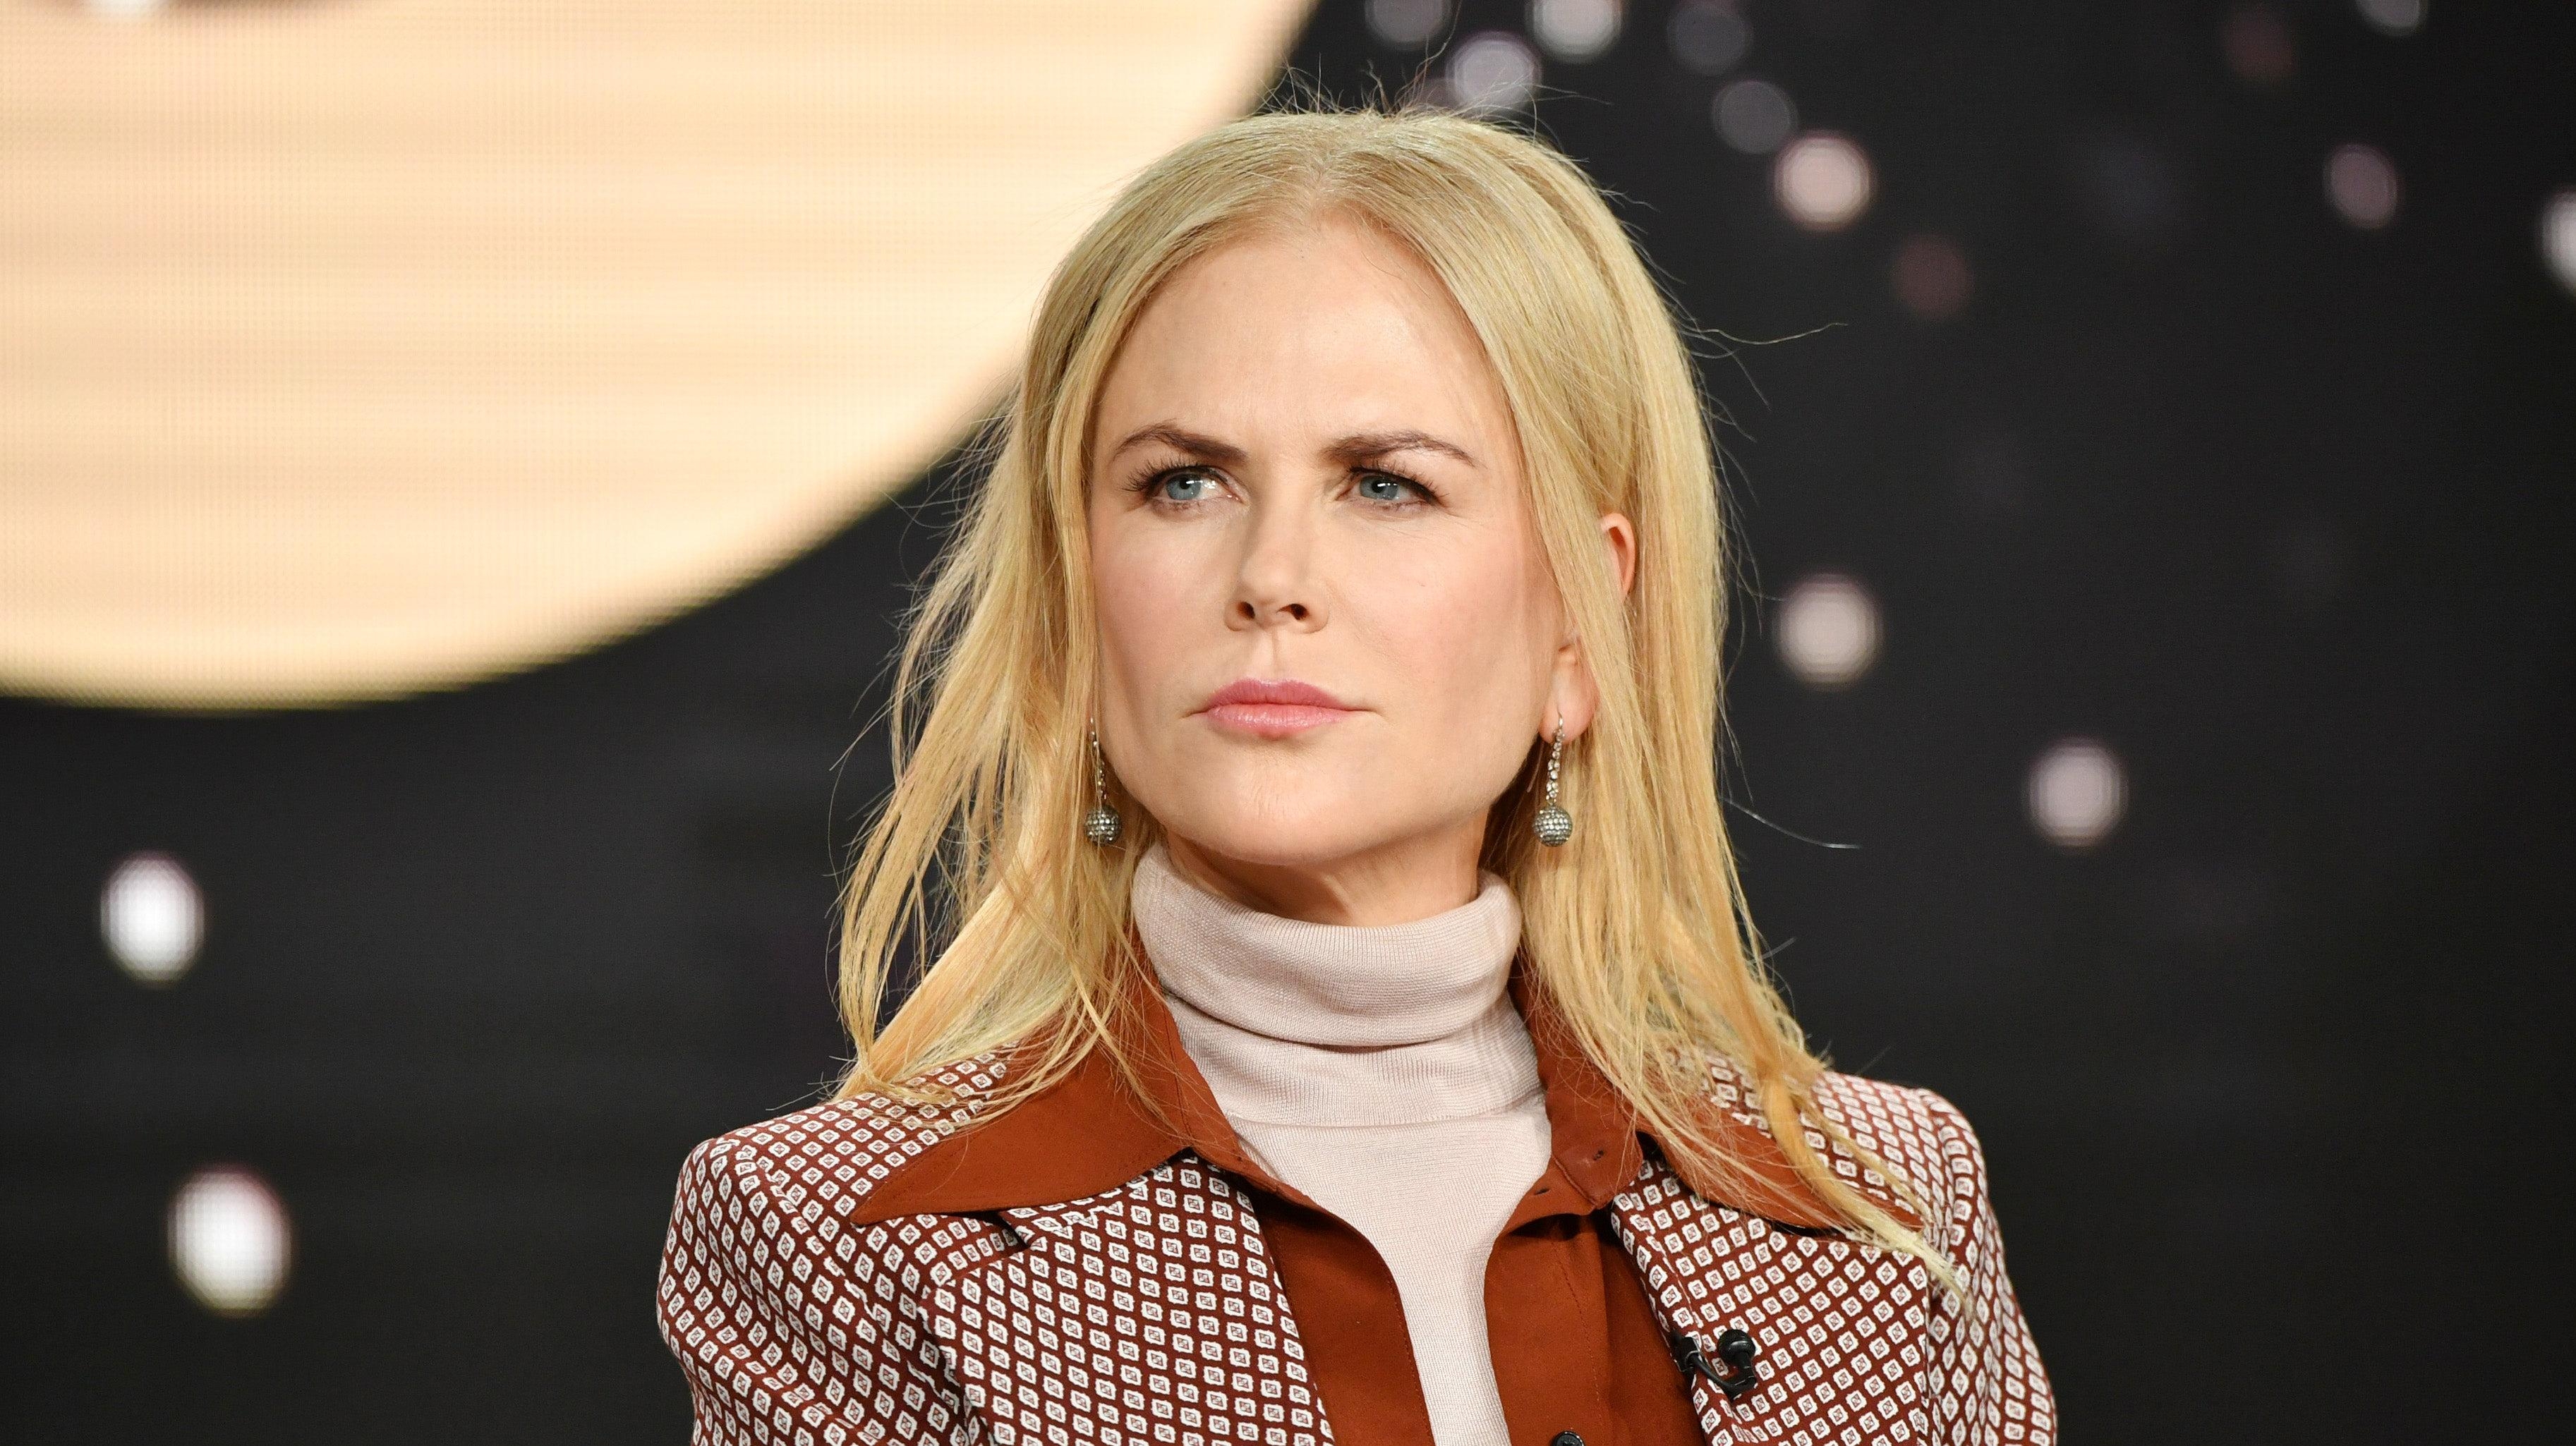 Nicole Kidman was able to skip quarantine in Hong Kong to film Amazon series, because she’s Nicole Kidman